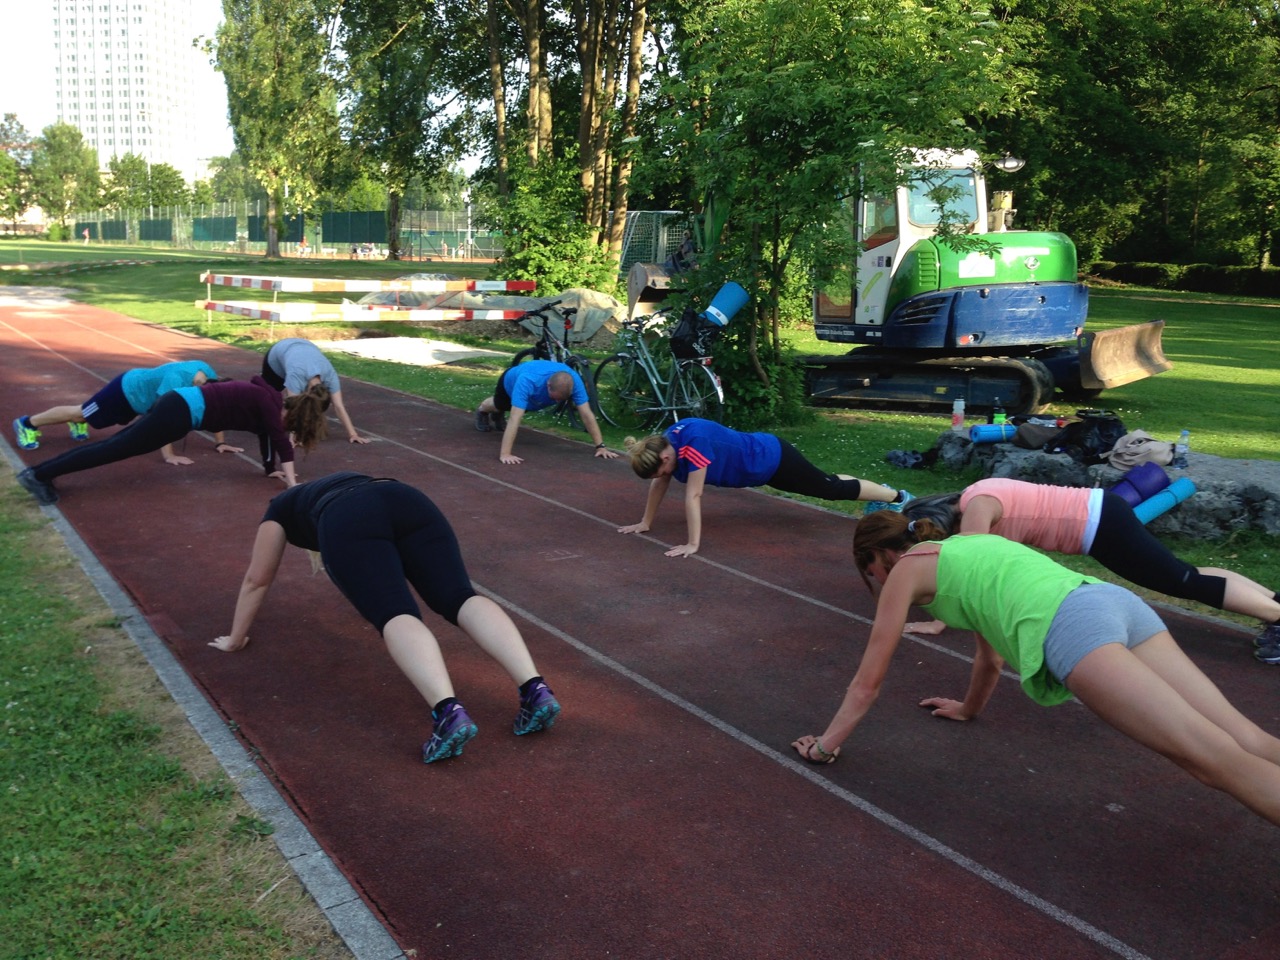 jerry kadavil Personal Trainer Training Winterthur Zürich Golf Pilates Yoga Crossfit Massage boot camp tantra hiit